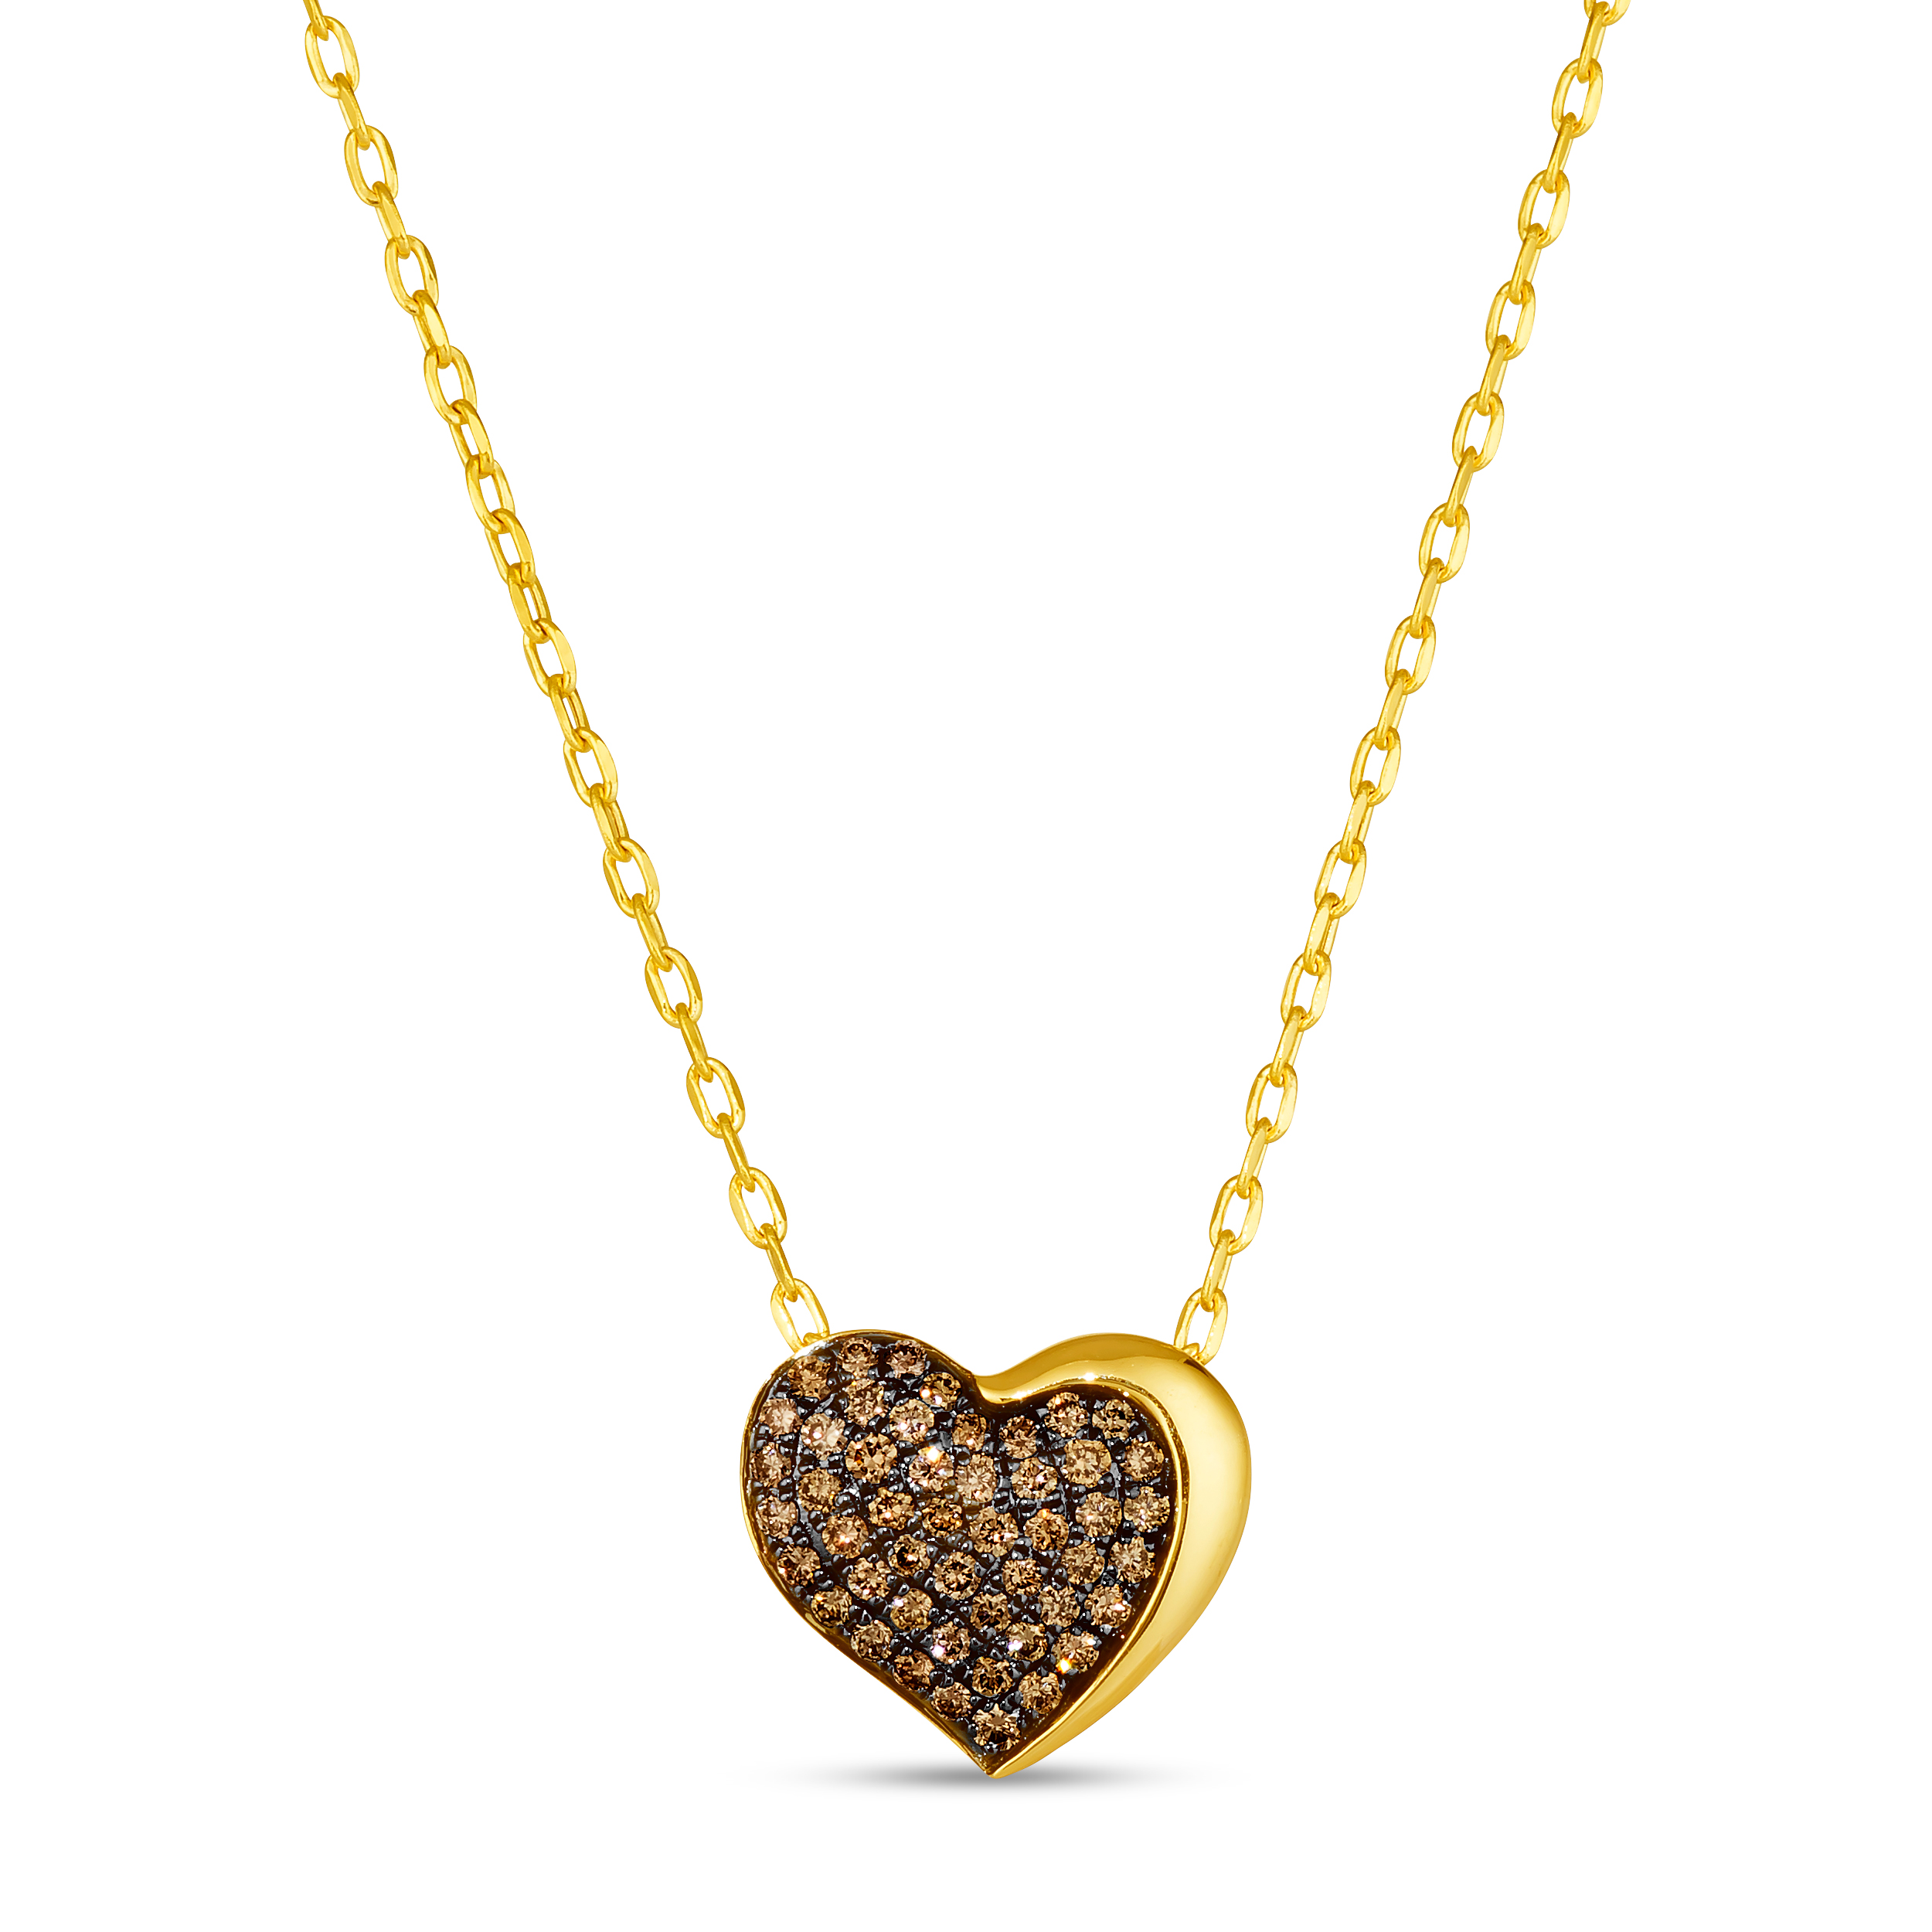 Diamond Heart Necklace with Chocolate Diamonds